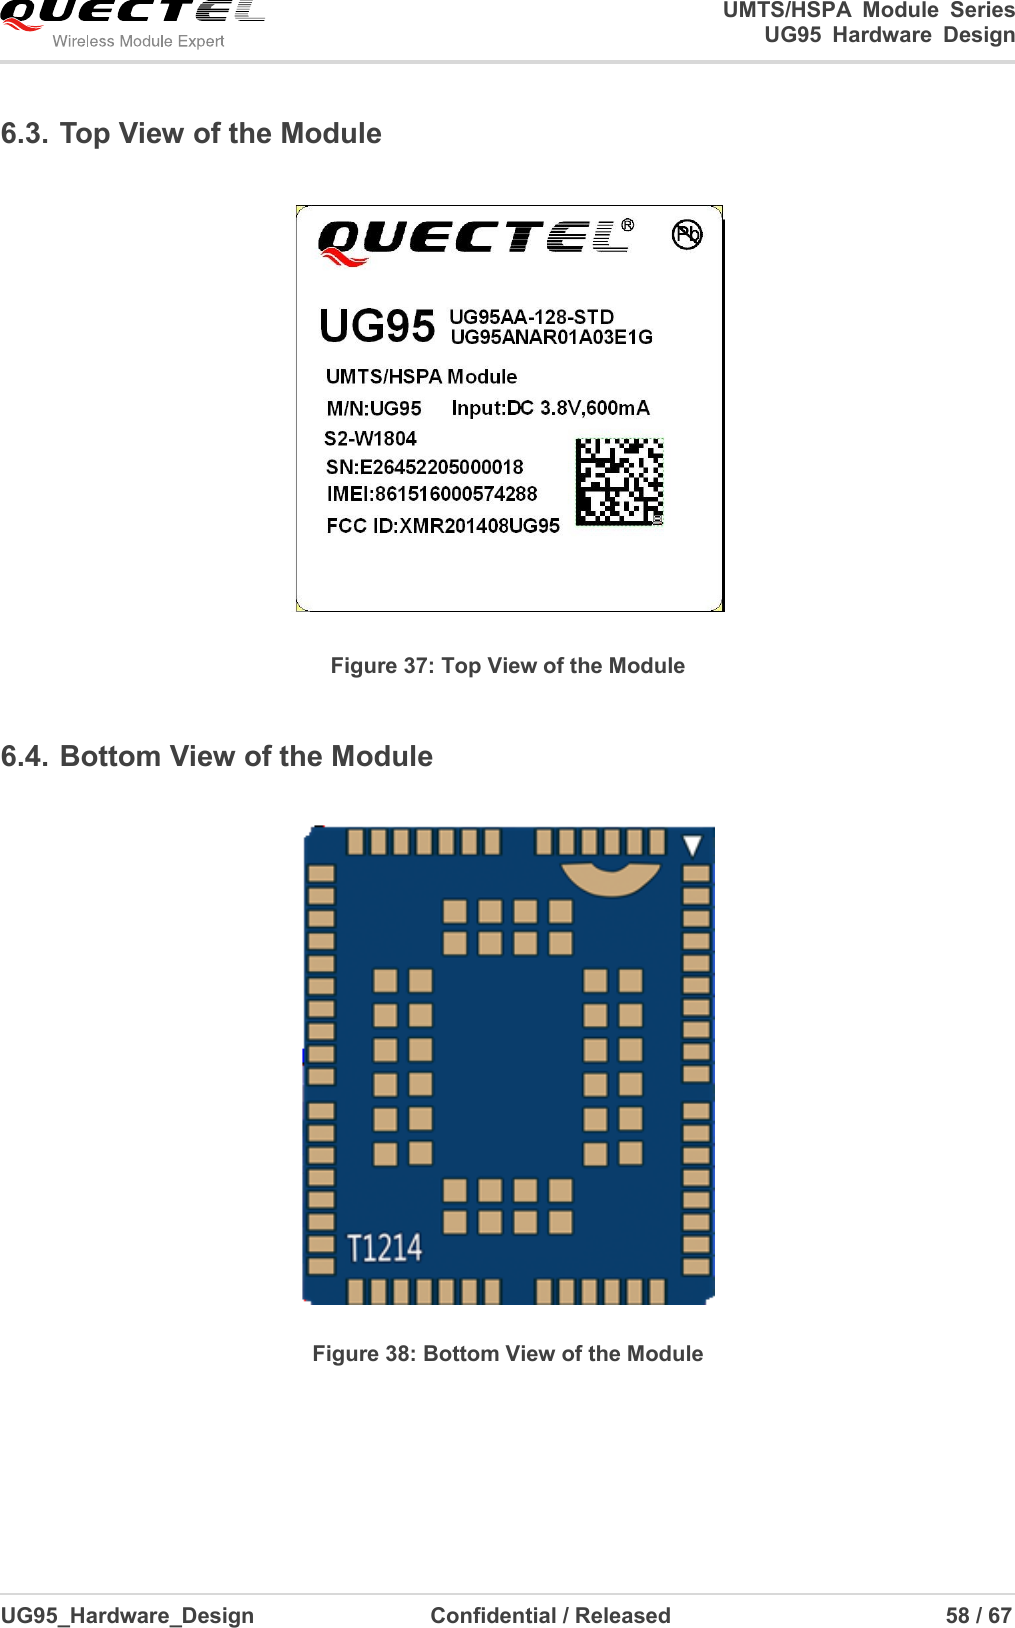                                                                                                                                               UMTS/HSPA  Module  Series                                                                 UG95  Hardware  Design  UG95_Hardware_Design                  Confidential / Released                             58 / 67    6.3. Top View of the Module   Figure 37: Top View of the Module 6.4. Bottom View of the Module   Figure 38: Bottom View of the Module 